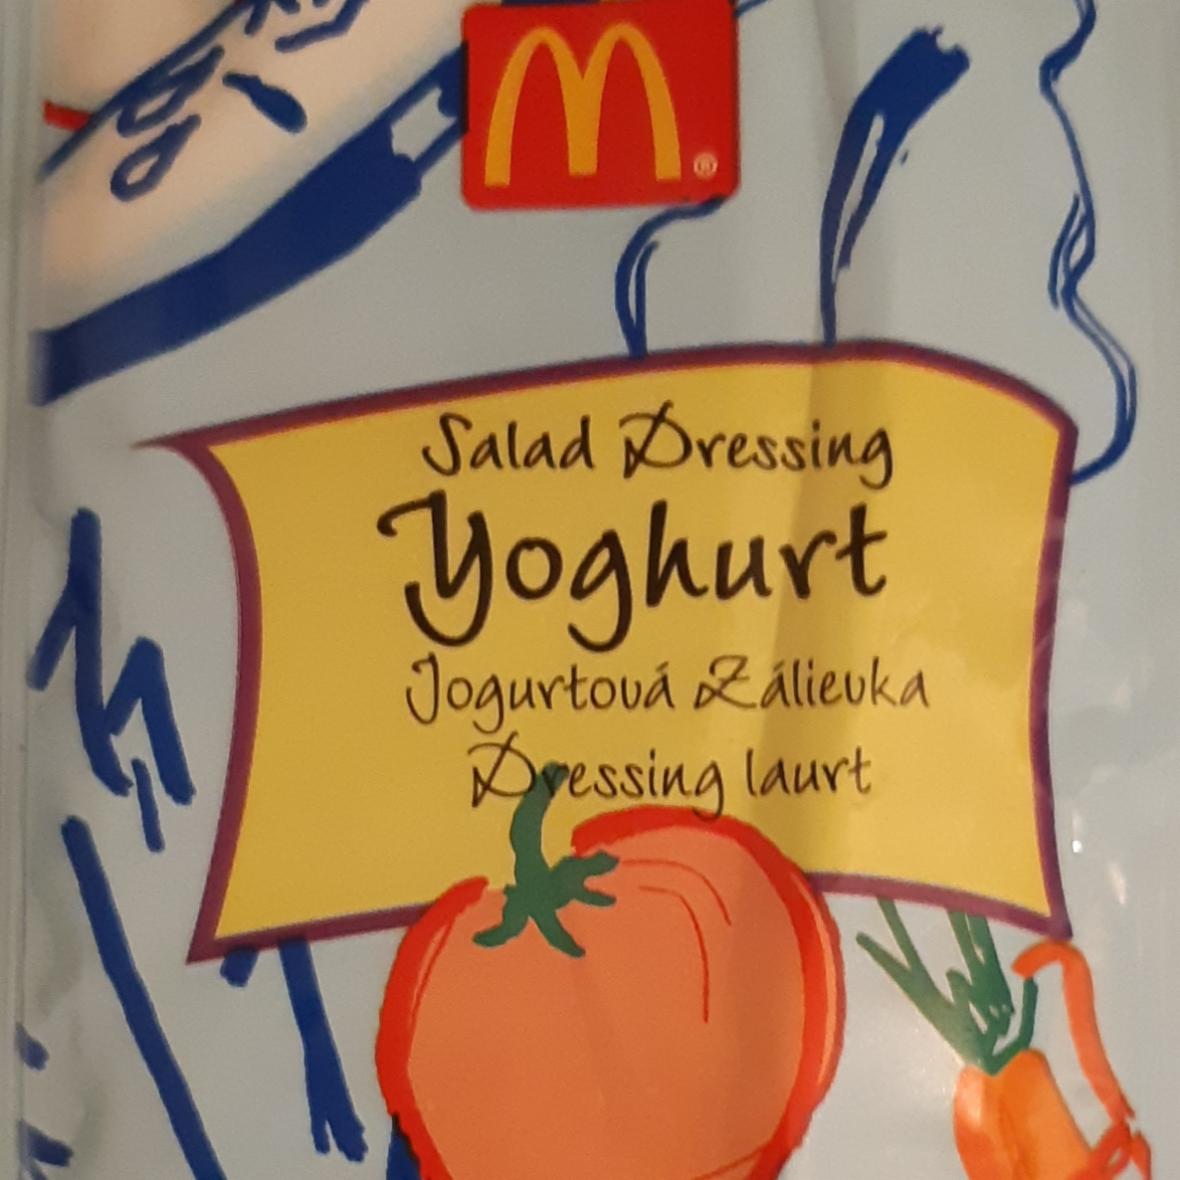 Fotografie - Yoghurt Salad Dressing McDonald's